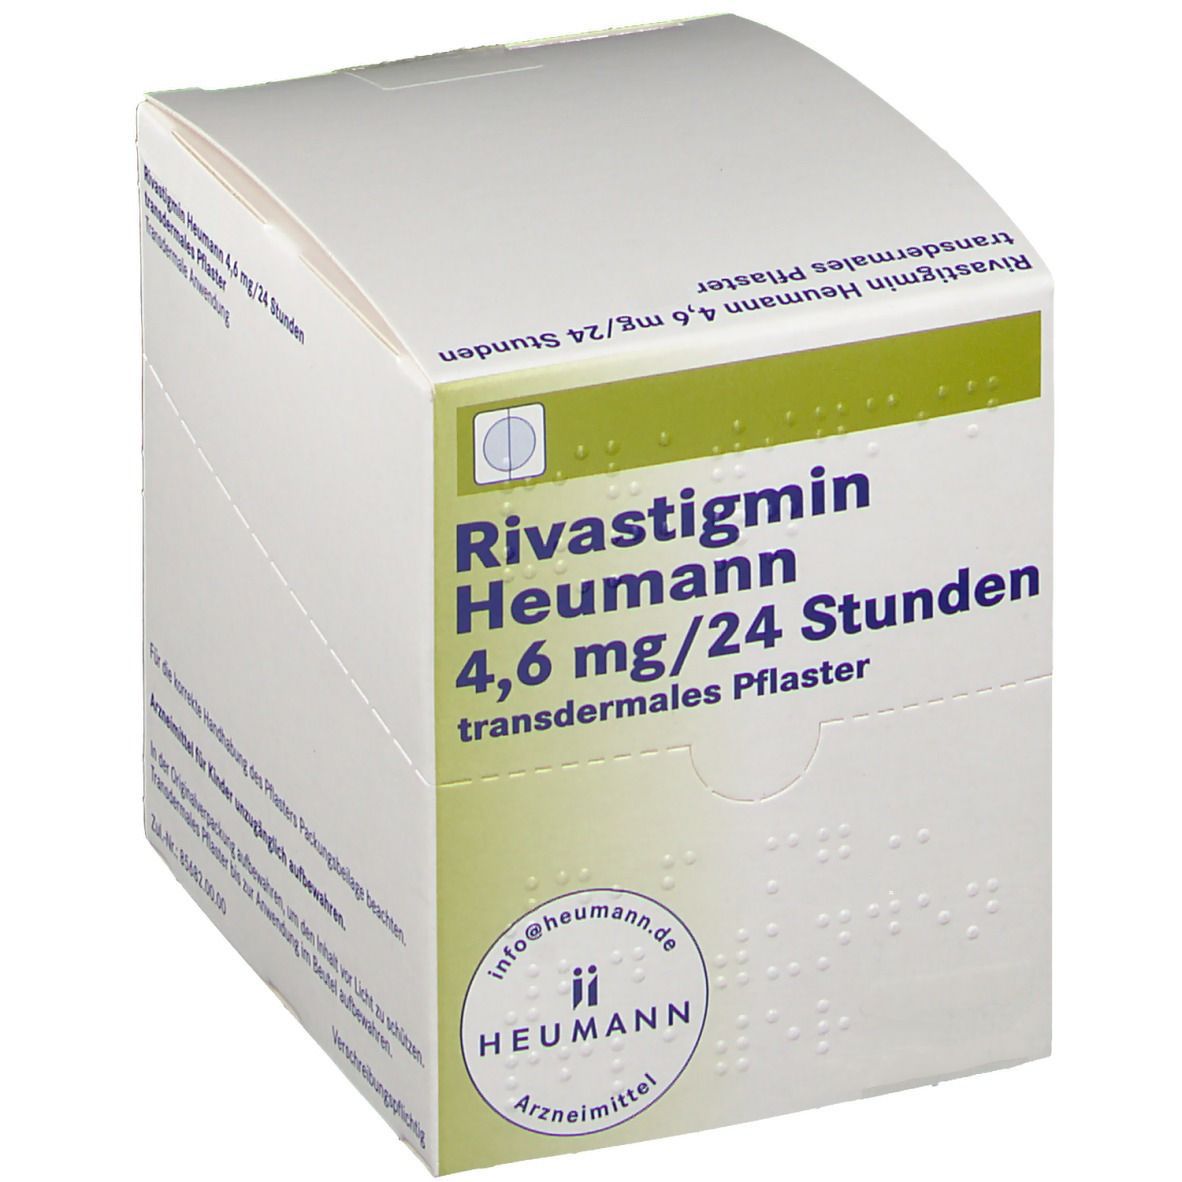 Rivastigmin Heumann 4,6 mg/24 Stunden